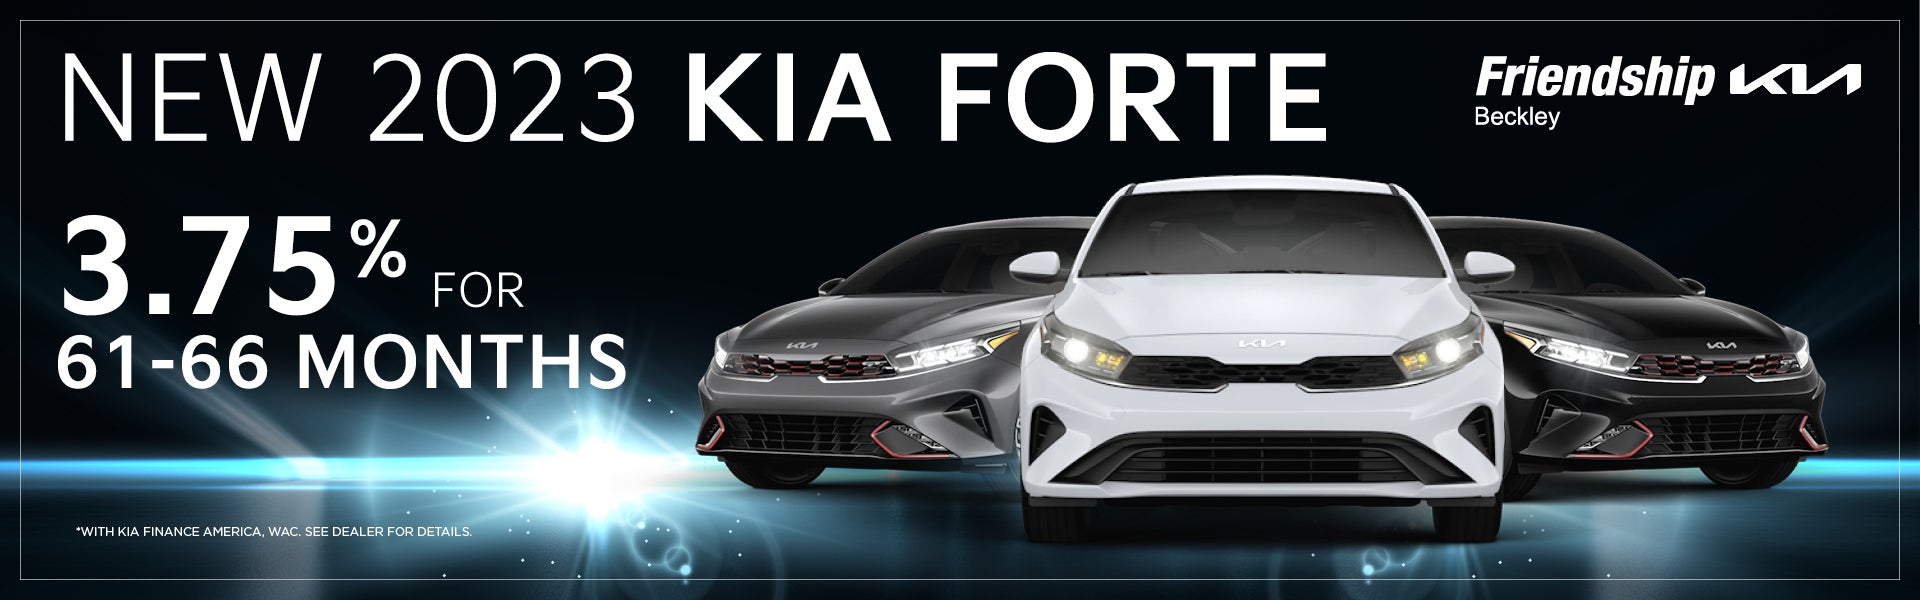 Friendship KIA has your Forte!